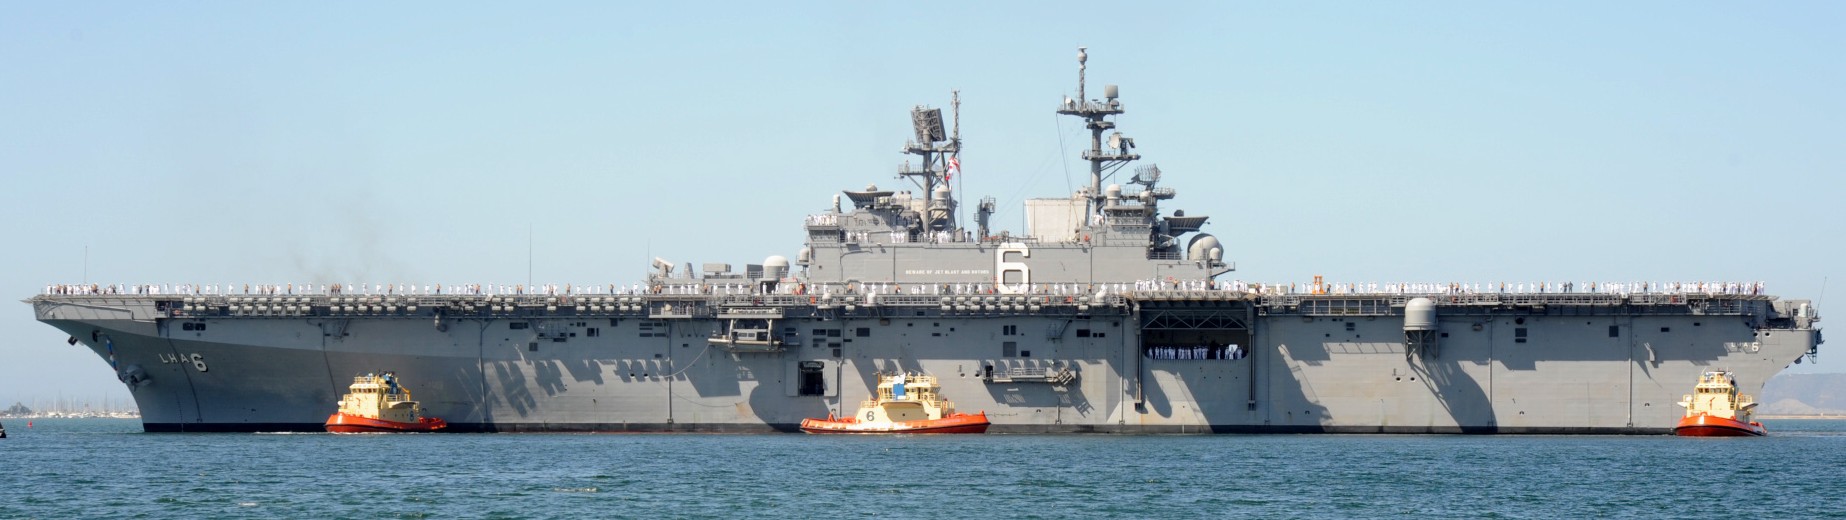 lha-6 uss america amphibious assault ship us navy 75 san diego